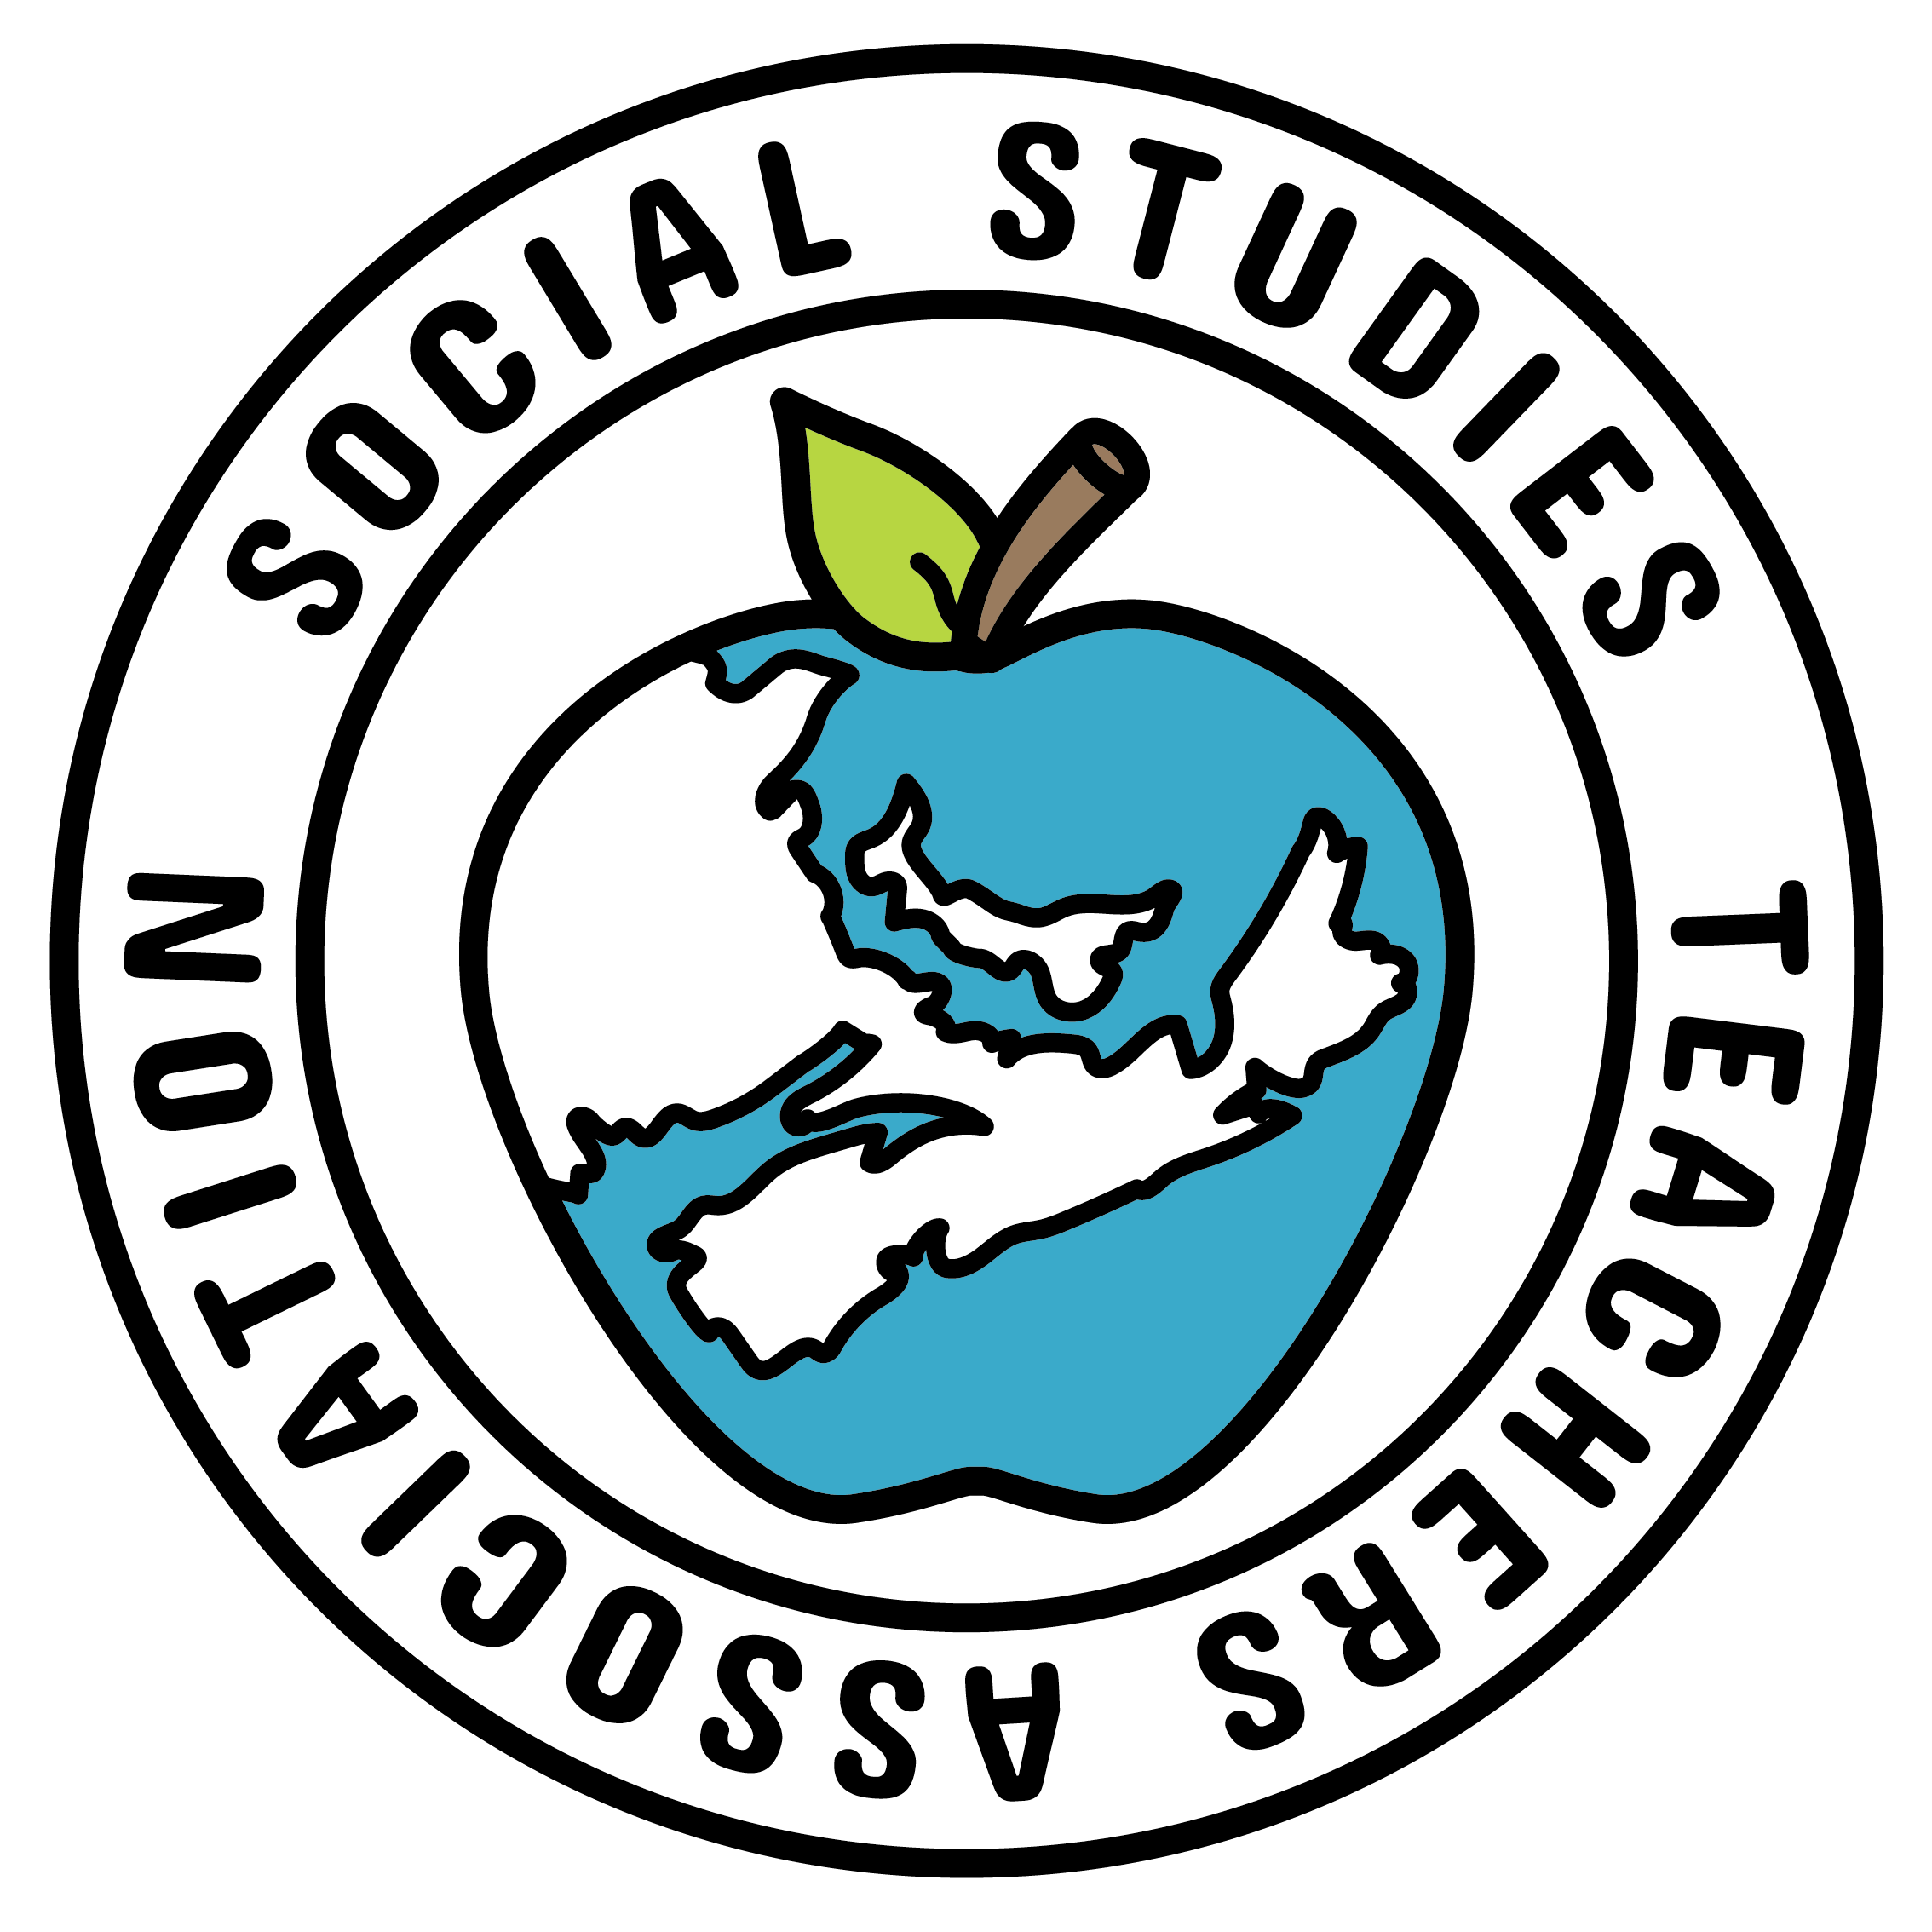 Nova Scotia Social Studies Teachers logo